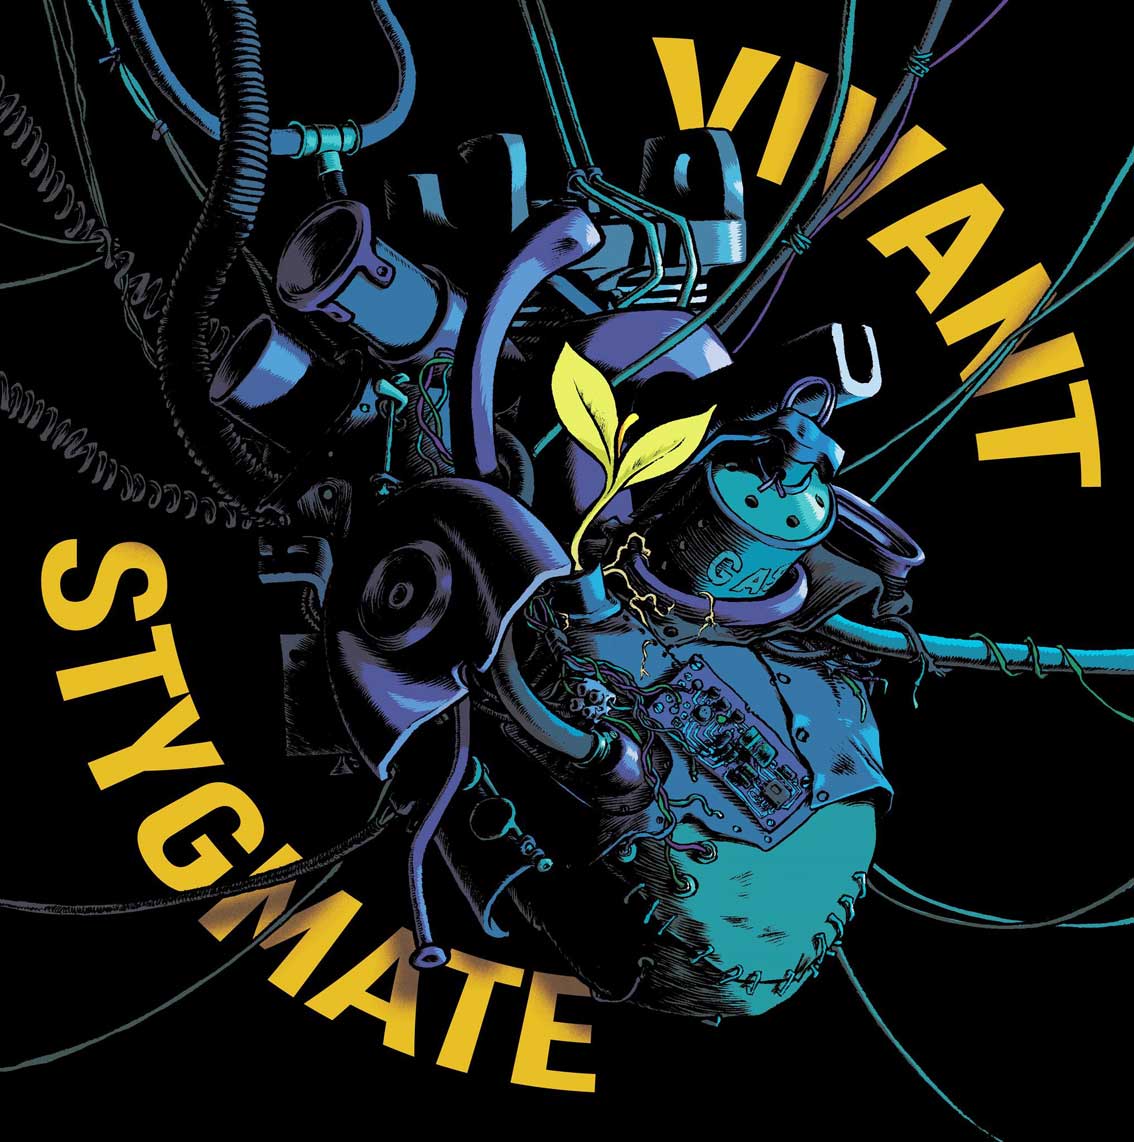 STYGMATE "Vivant" - CD